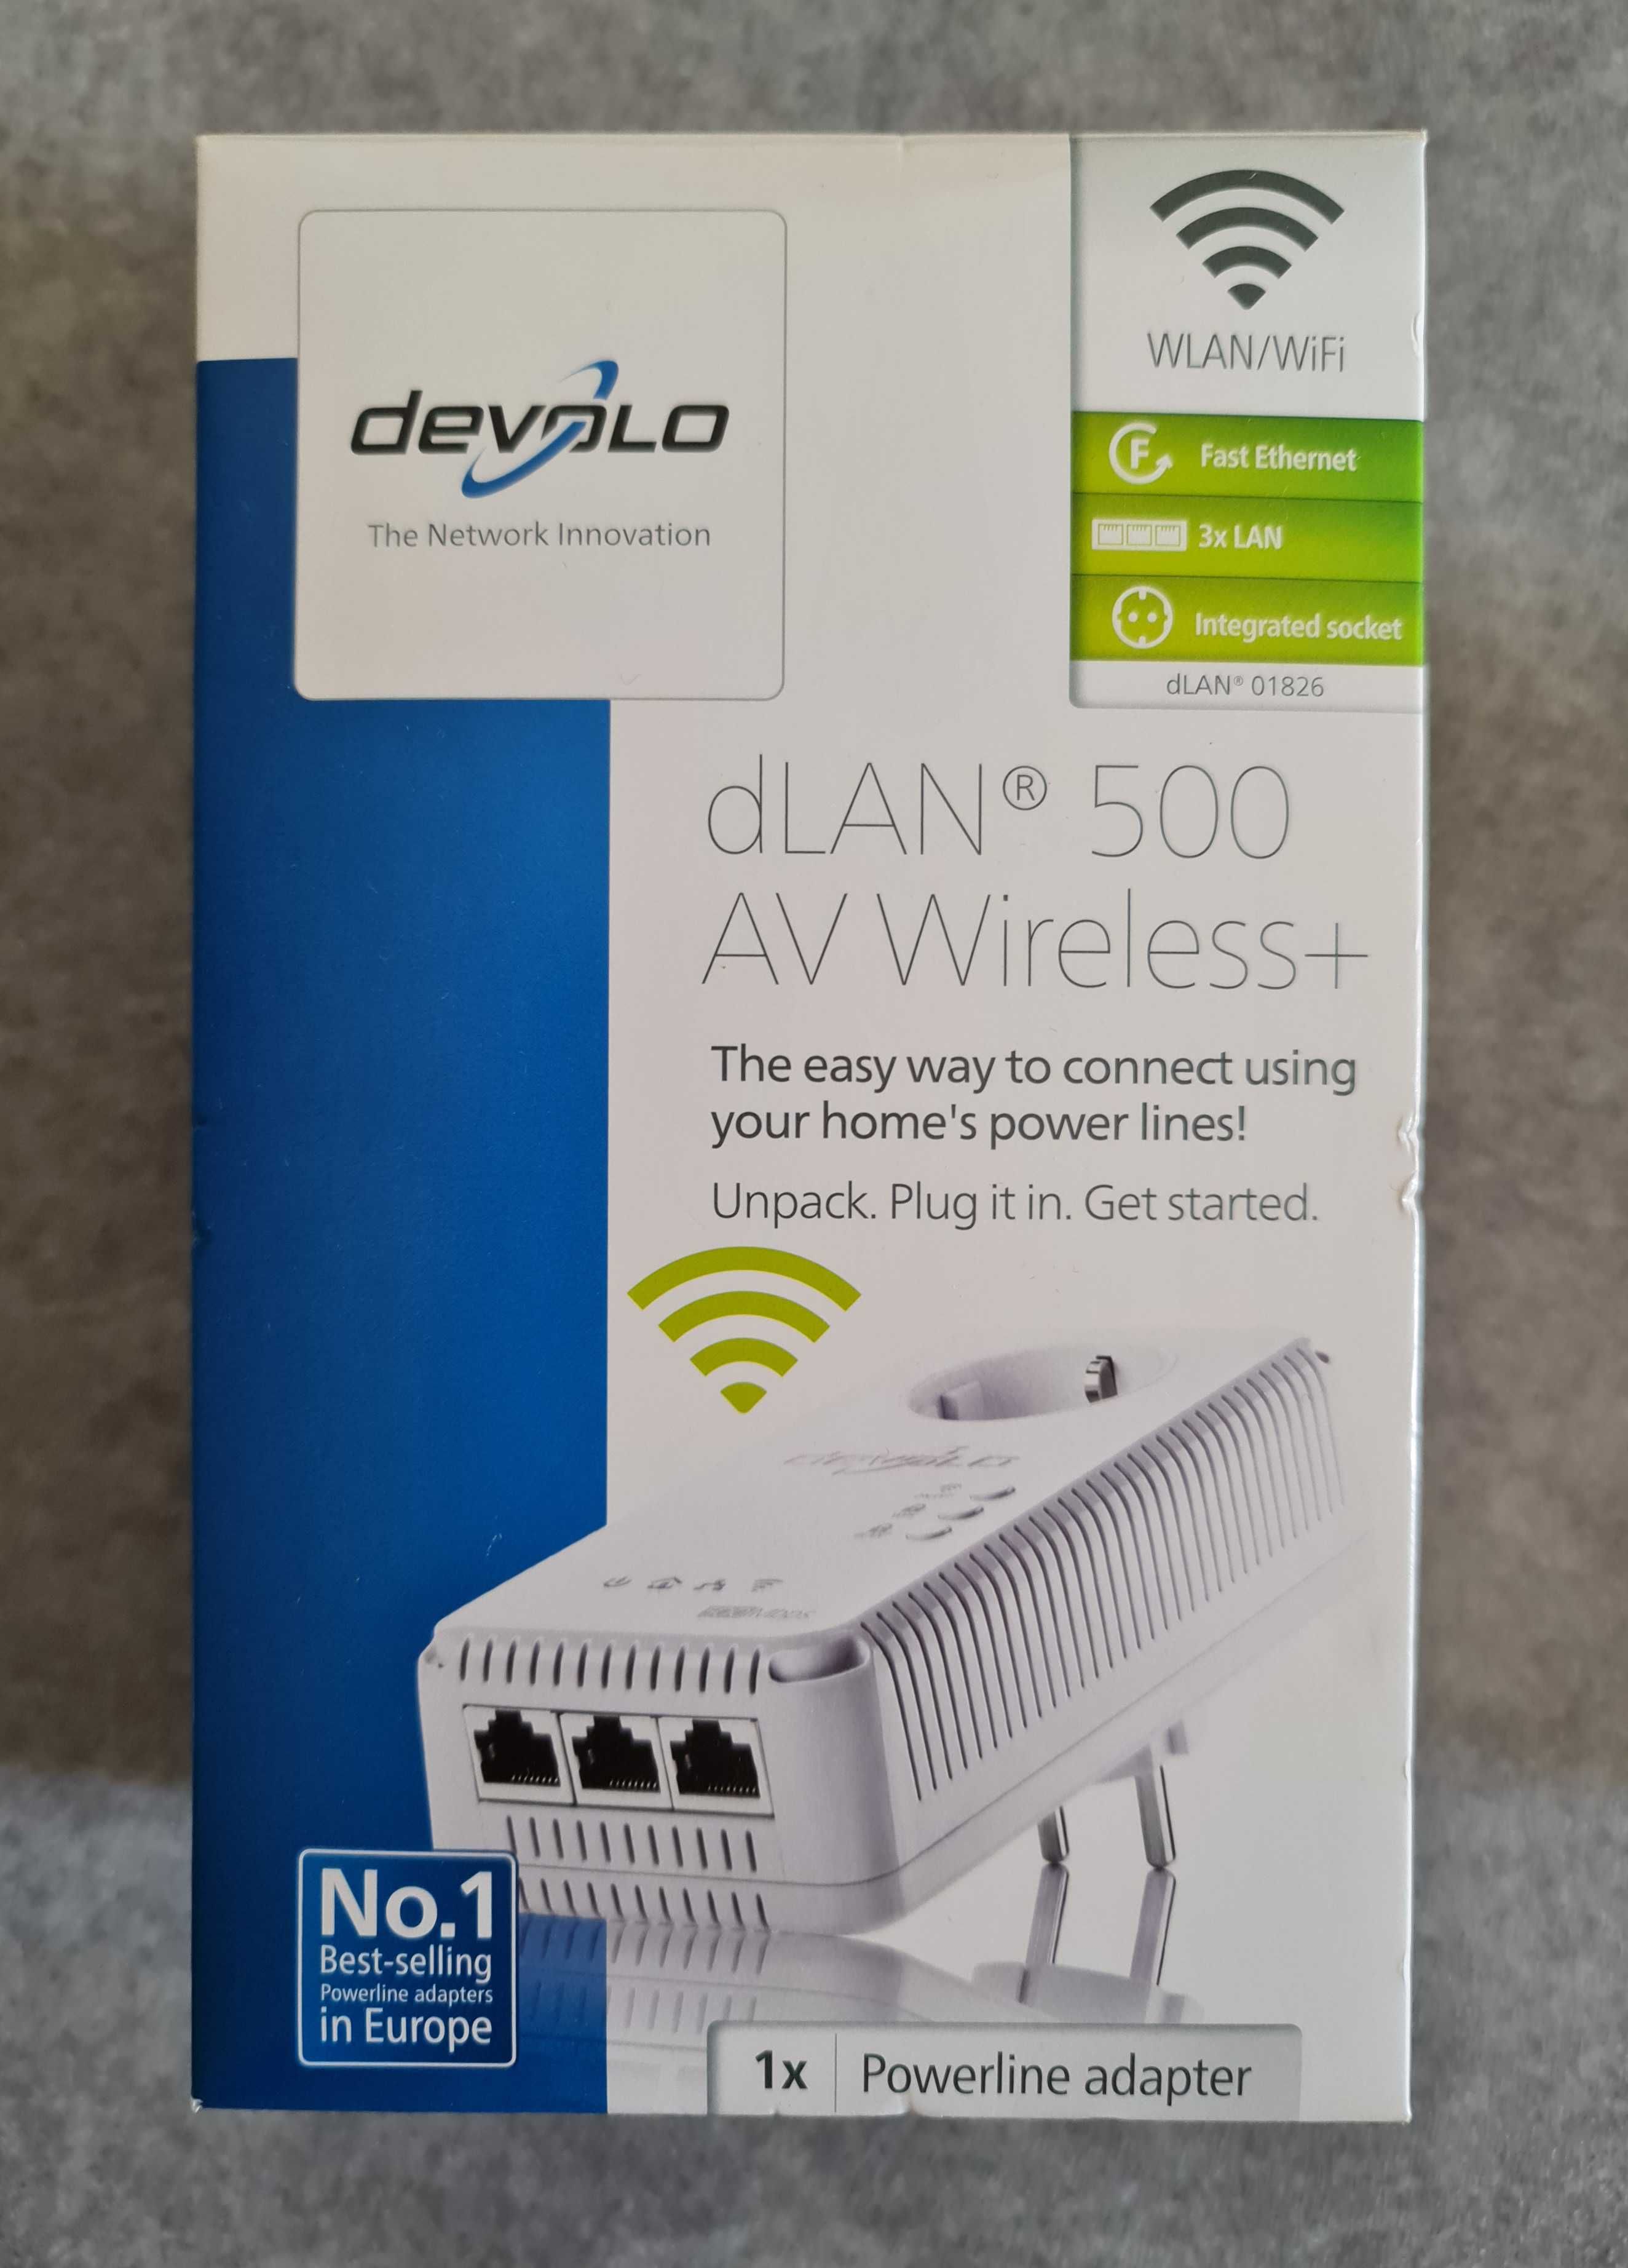 Devolo dLAN 500 AV Wireless+ (2 unidades, como novos)